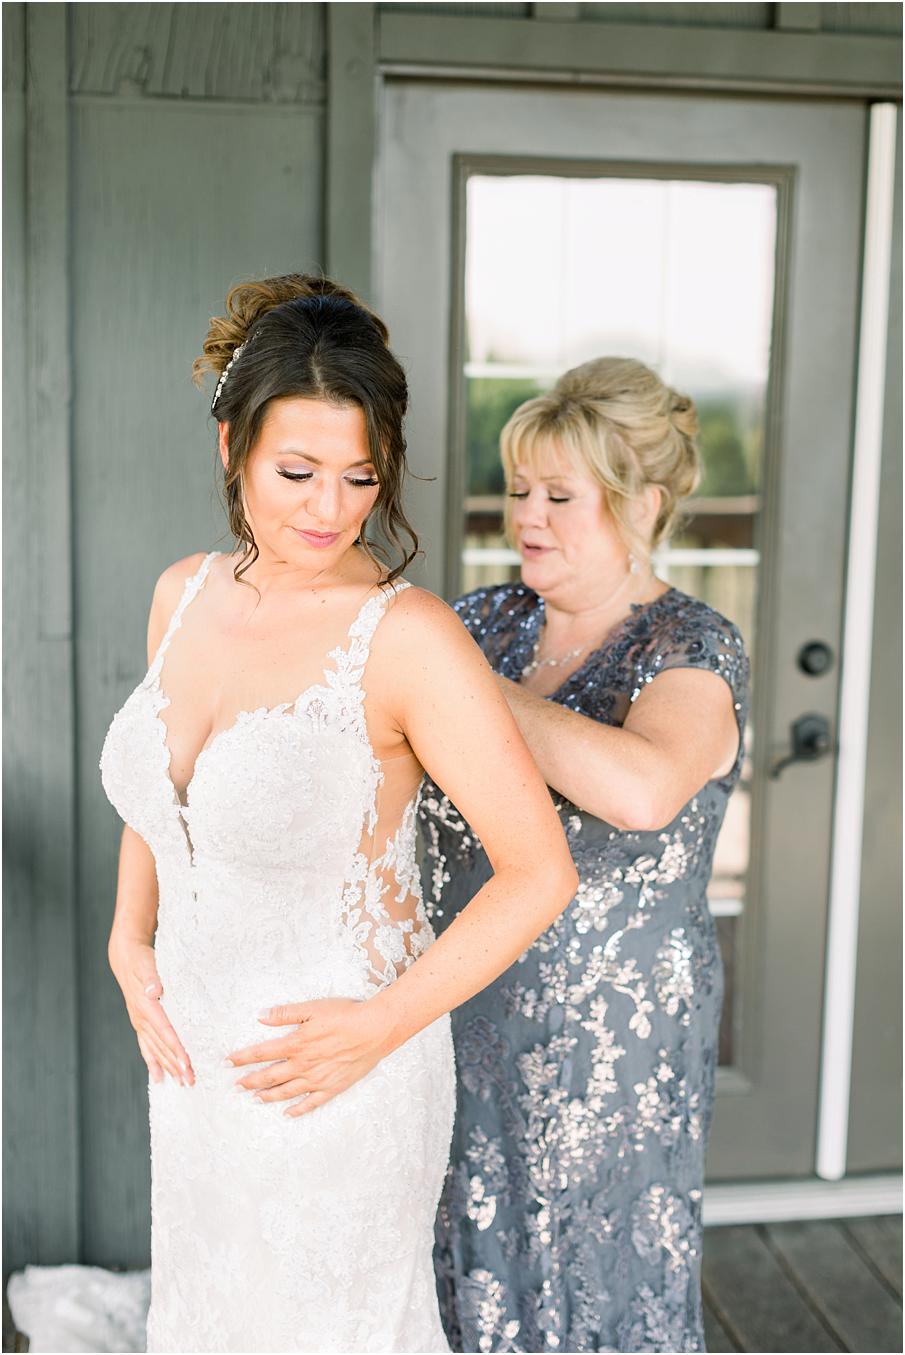 Mom buttoning bride's dress in Bluemont Vineyard's bridal suite before Bluemont Vineyard Wedding Day